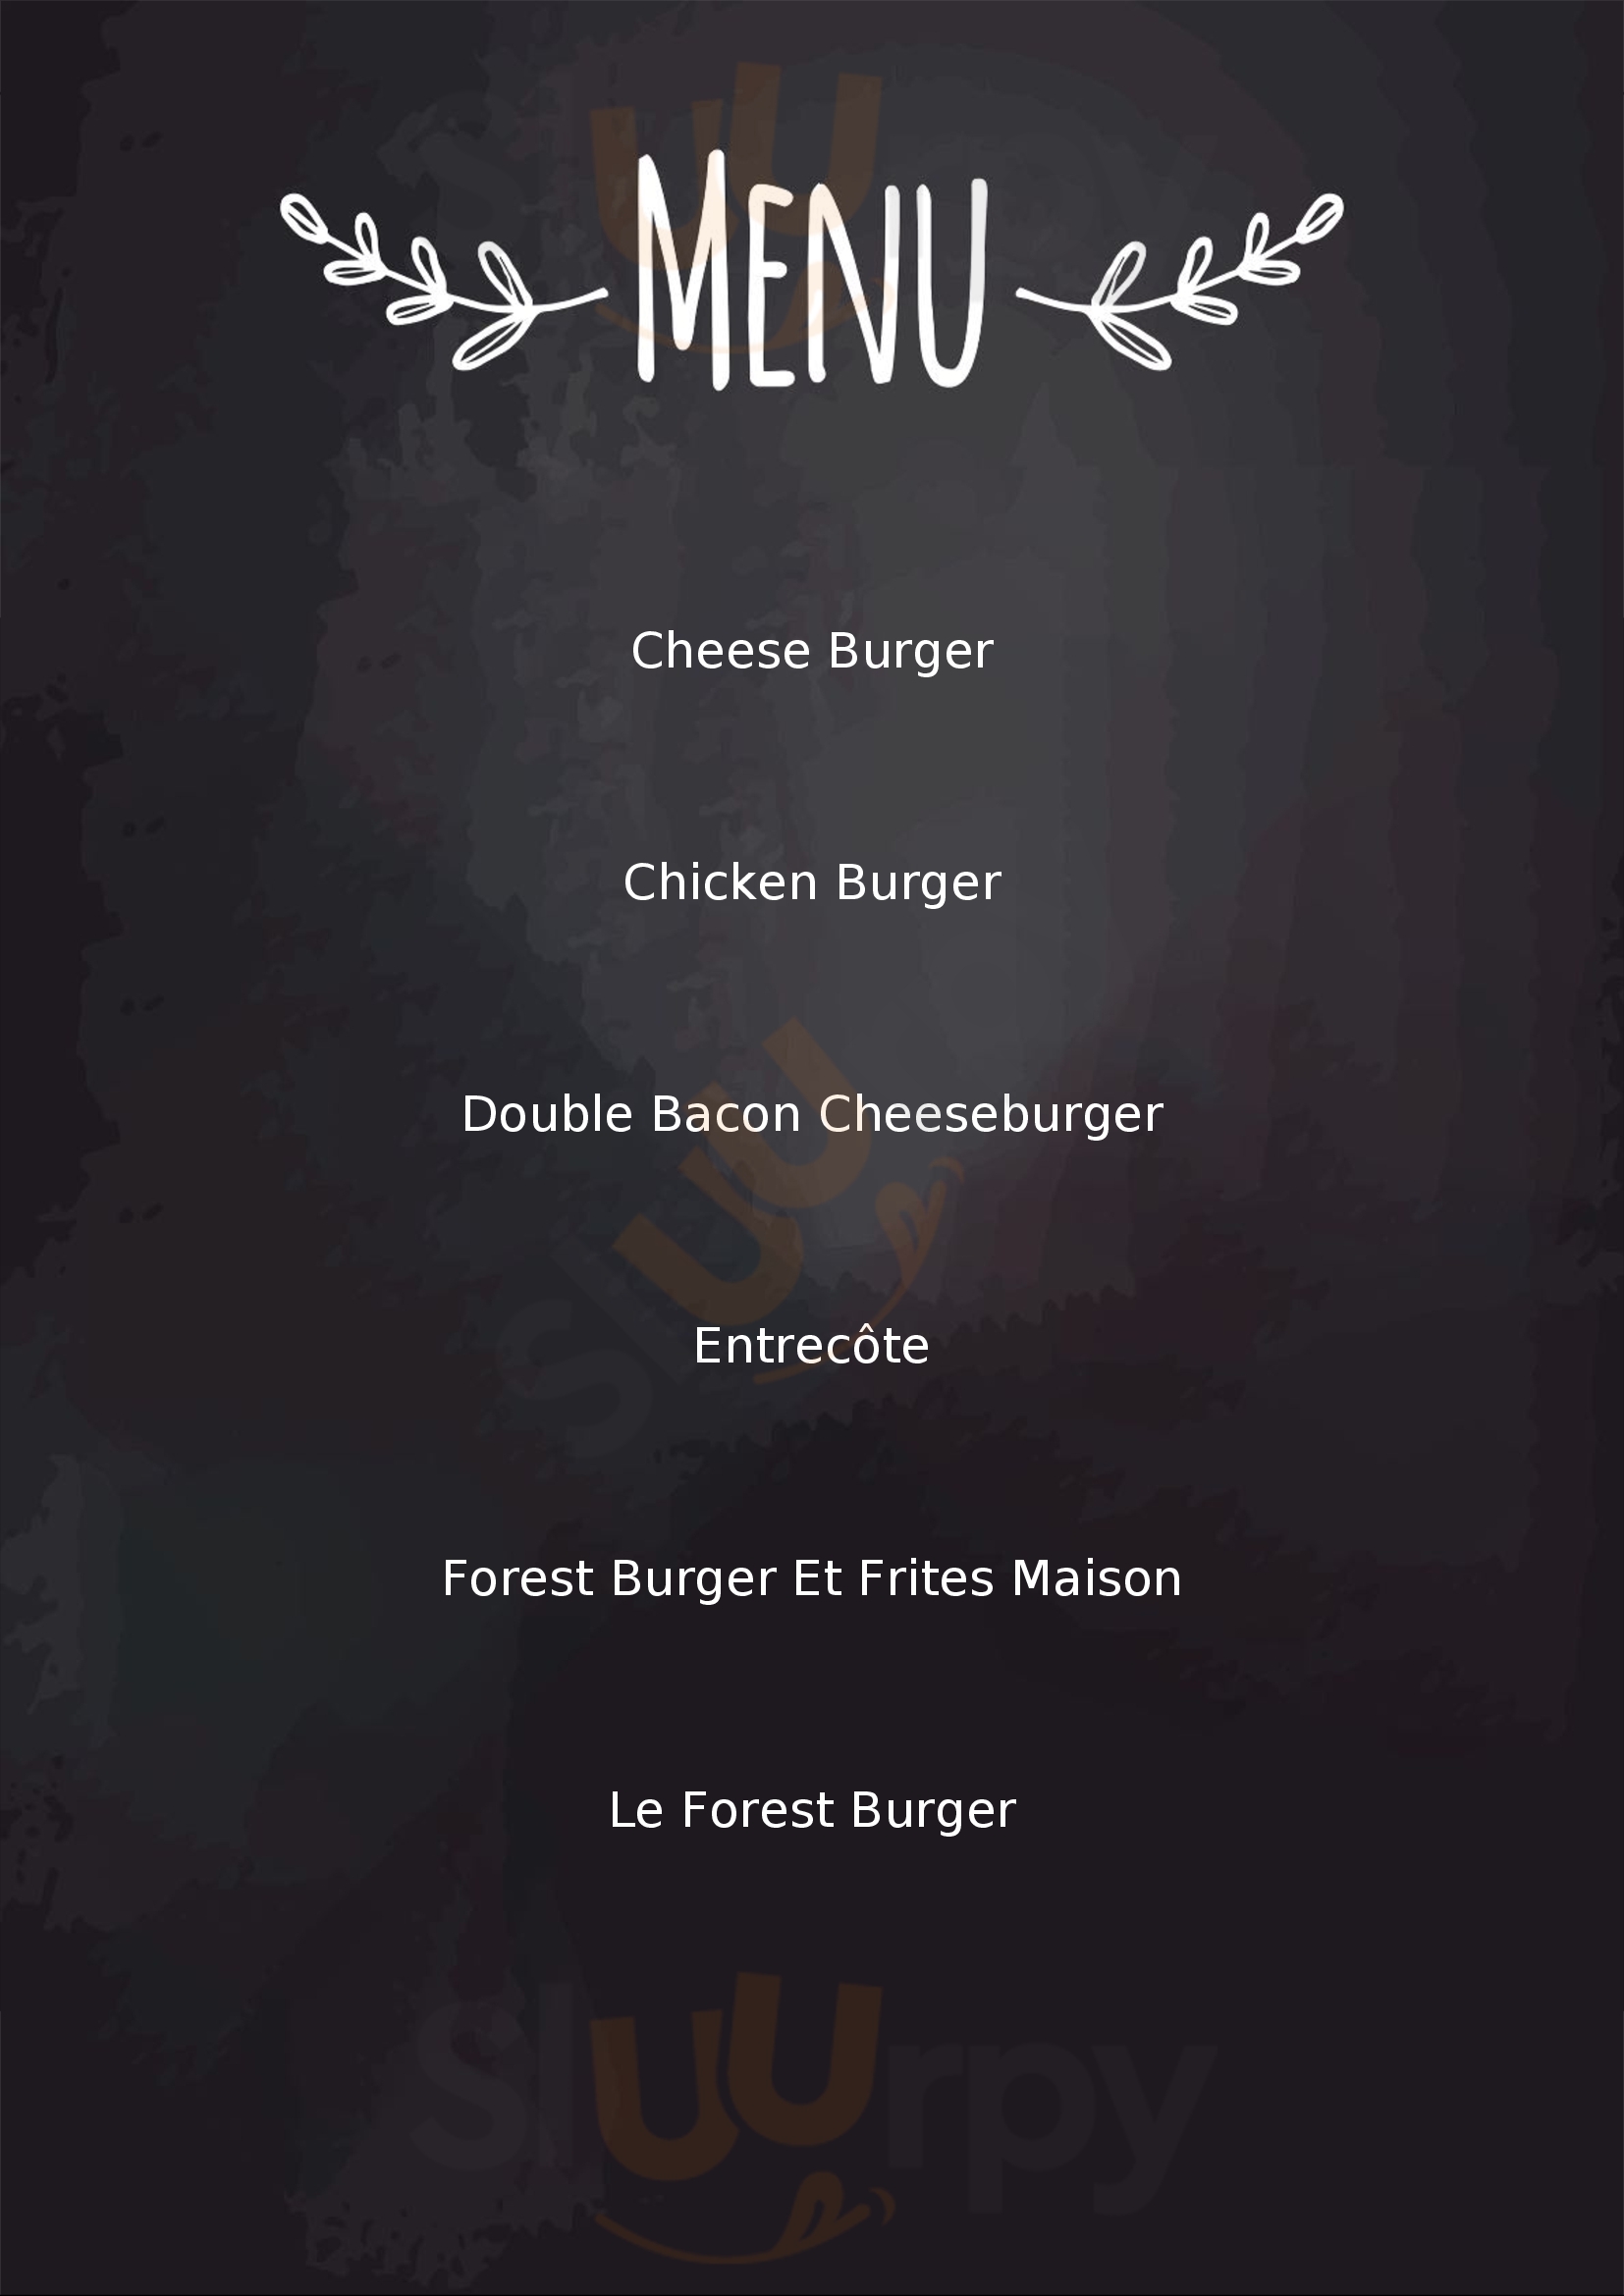 Bgr - Burger Gourmand Et Race Paris Menu - 1